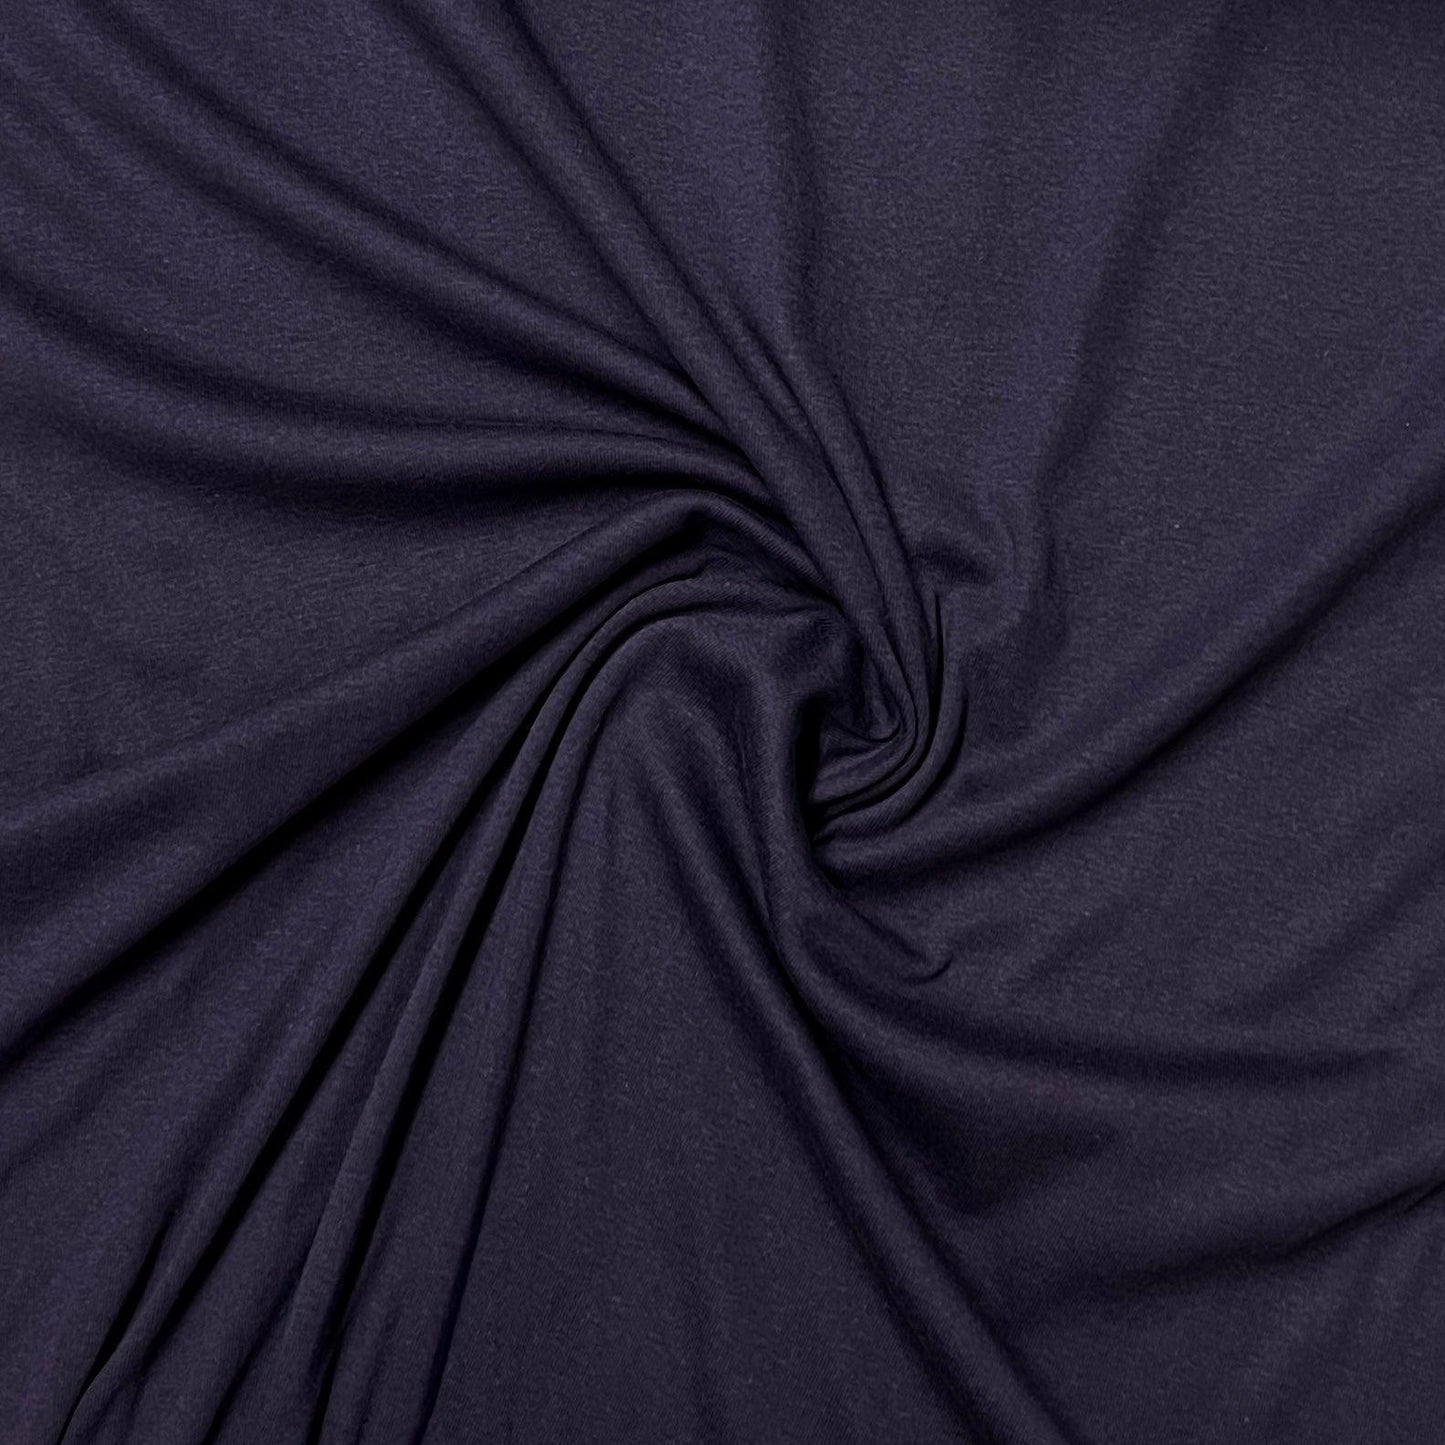 Eggplant Cotton Rib Knit Fabric - Nature's Fabrics